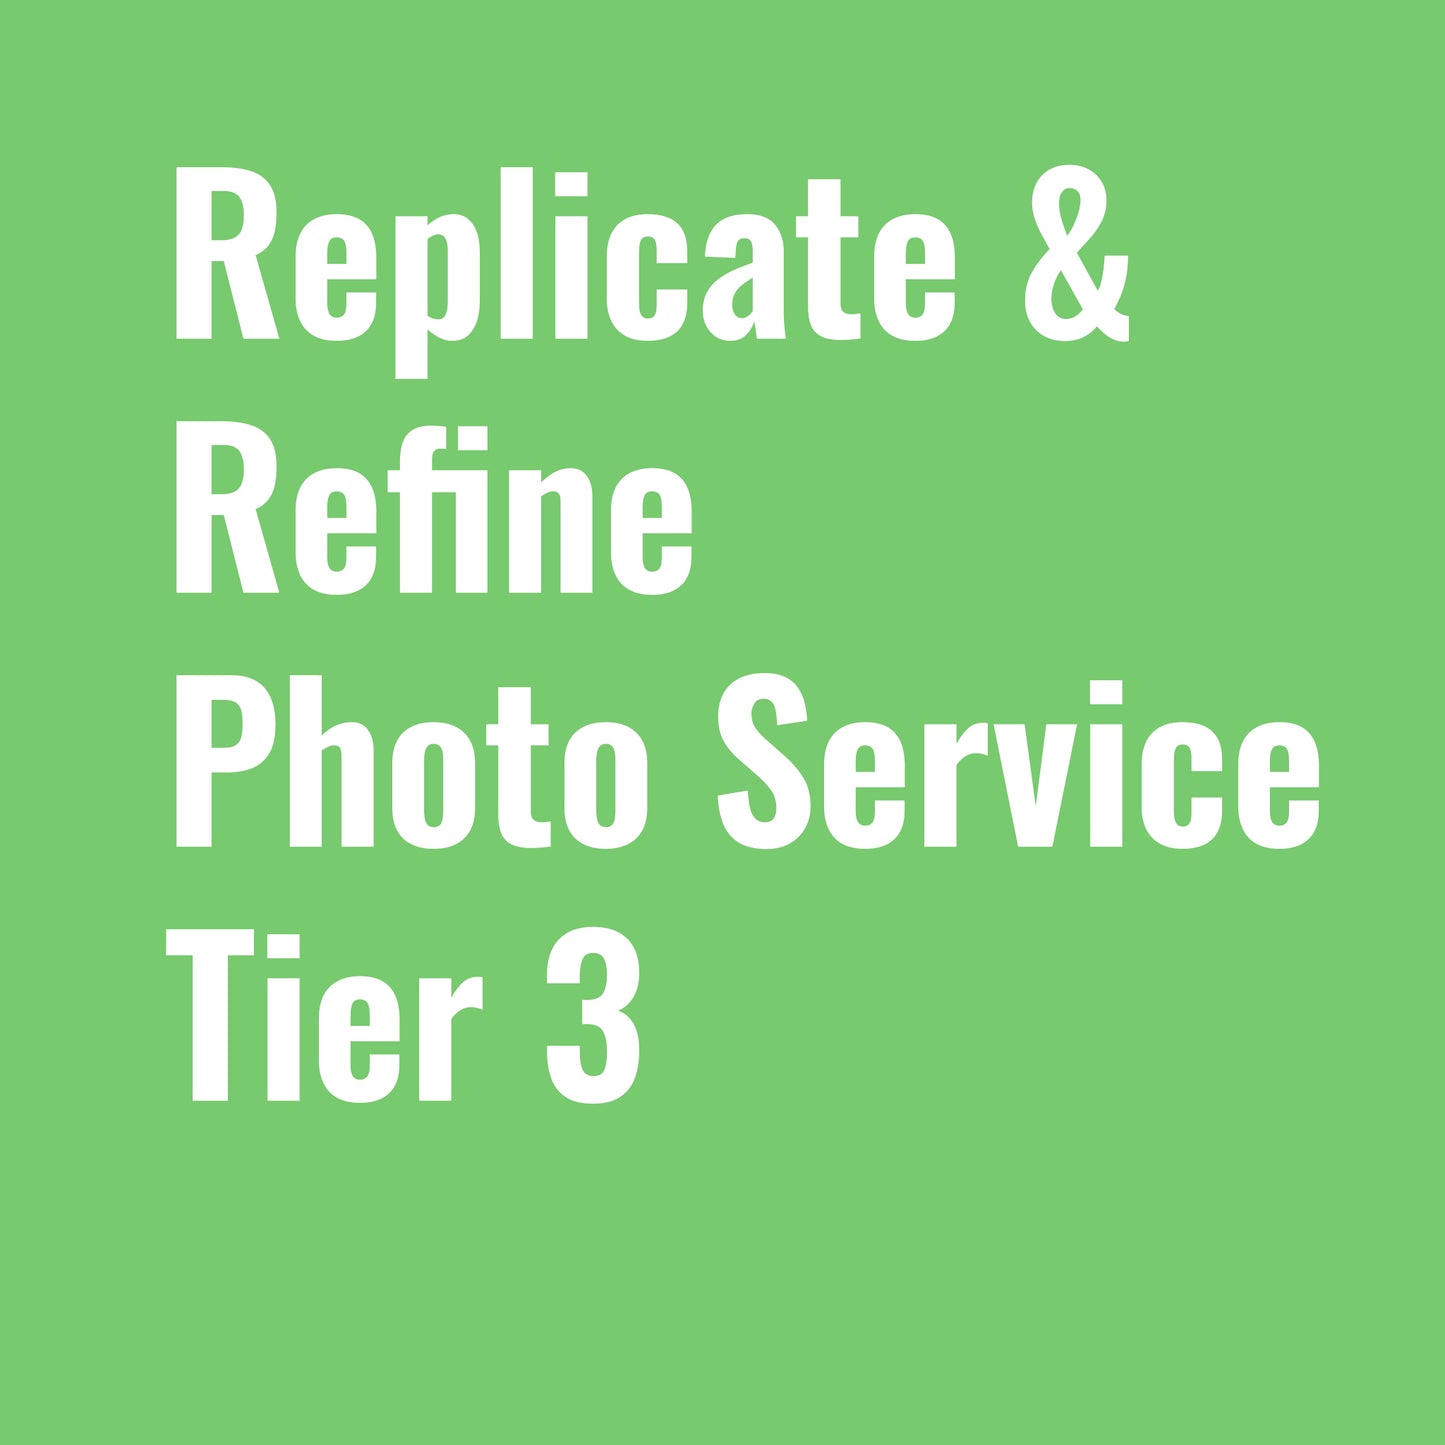 Photo Service Tier 3 - "Replicate & Refine" - by K. A. Artist Shop Services - K. A. Artist Shop